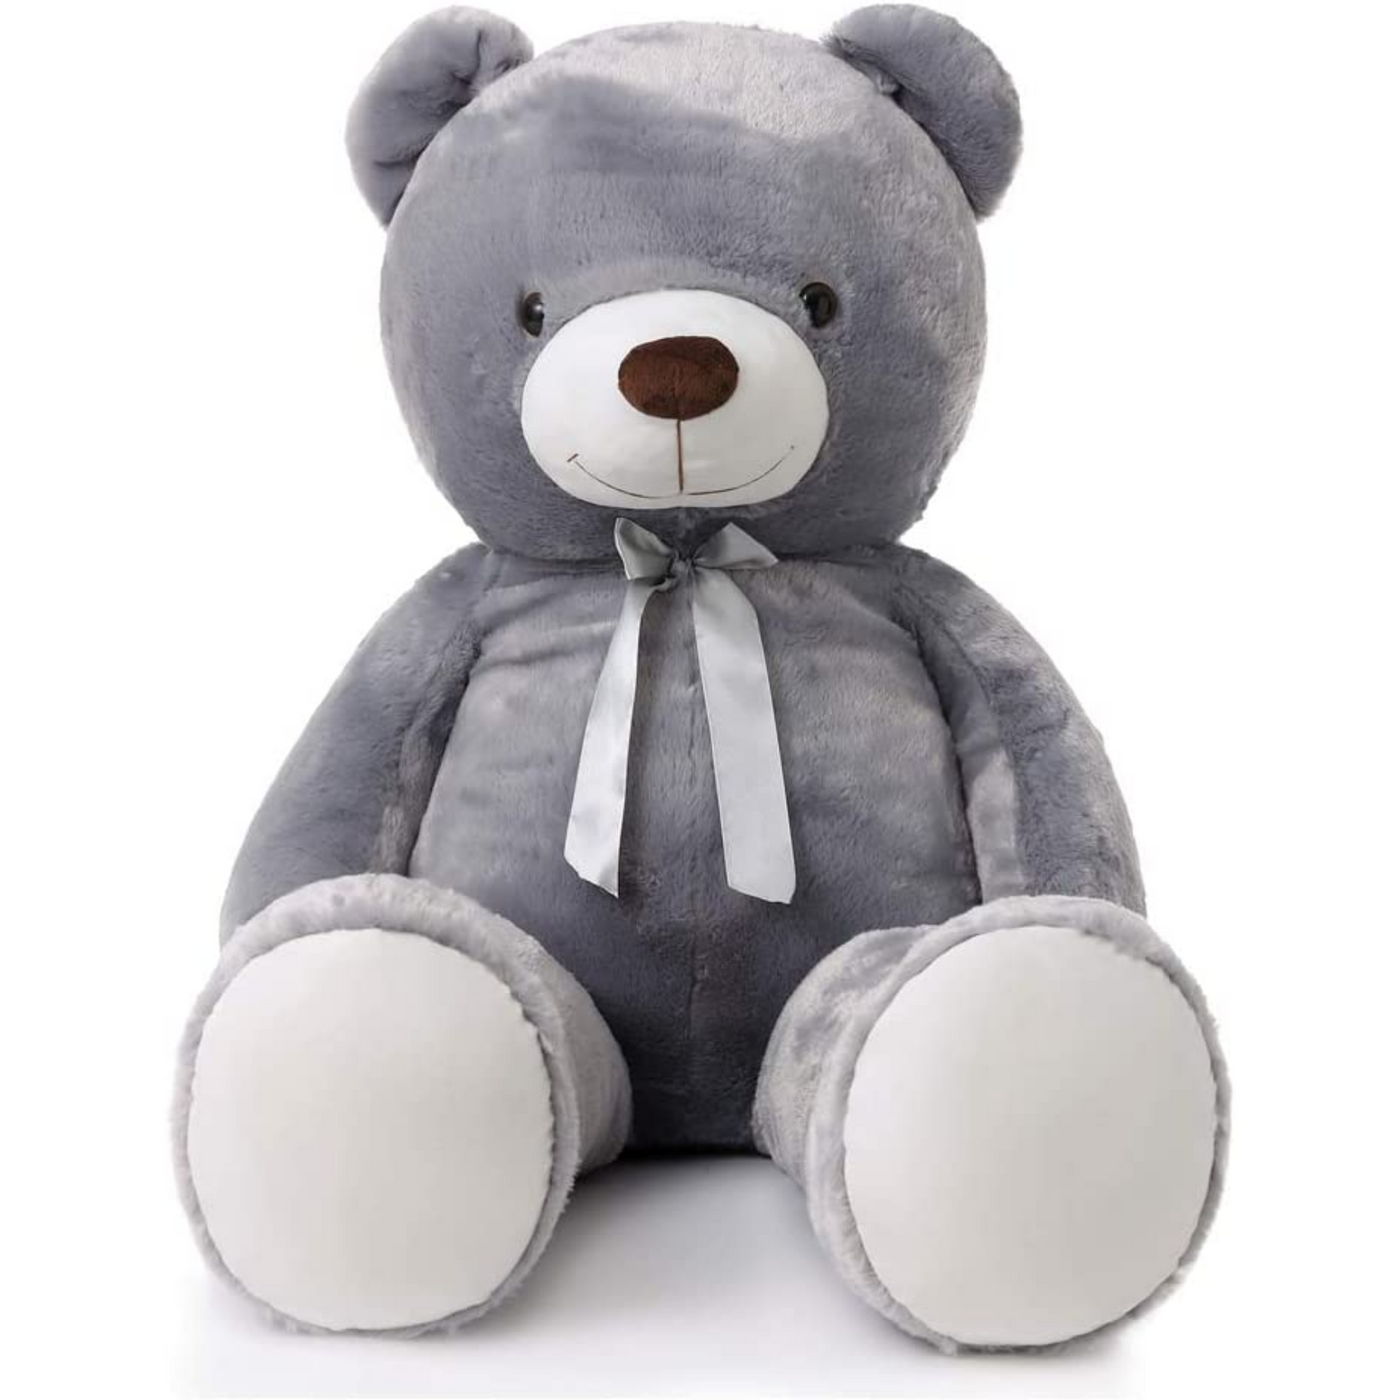 Giant Teddy Bear Stuffed Toy, Grey, 47 Inches - MorisMos Plush Toys